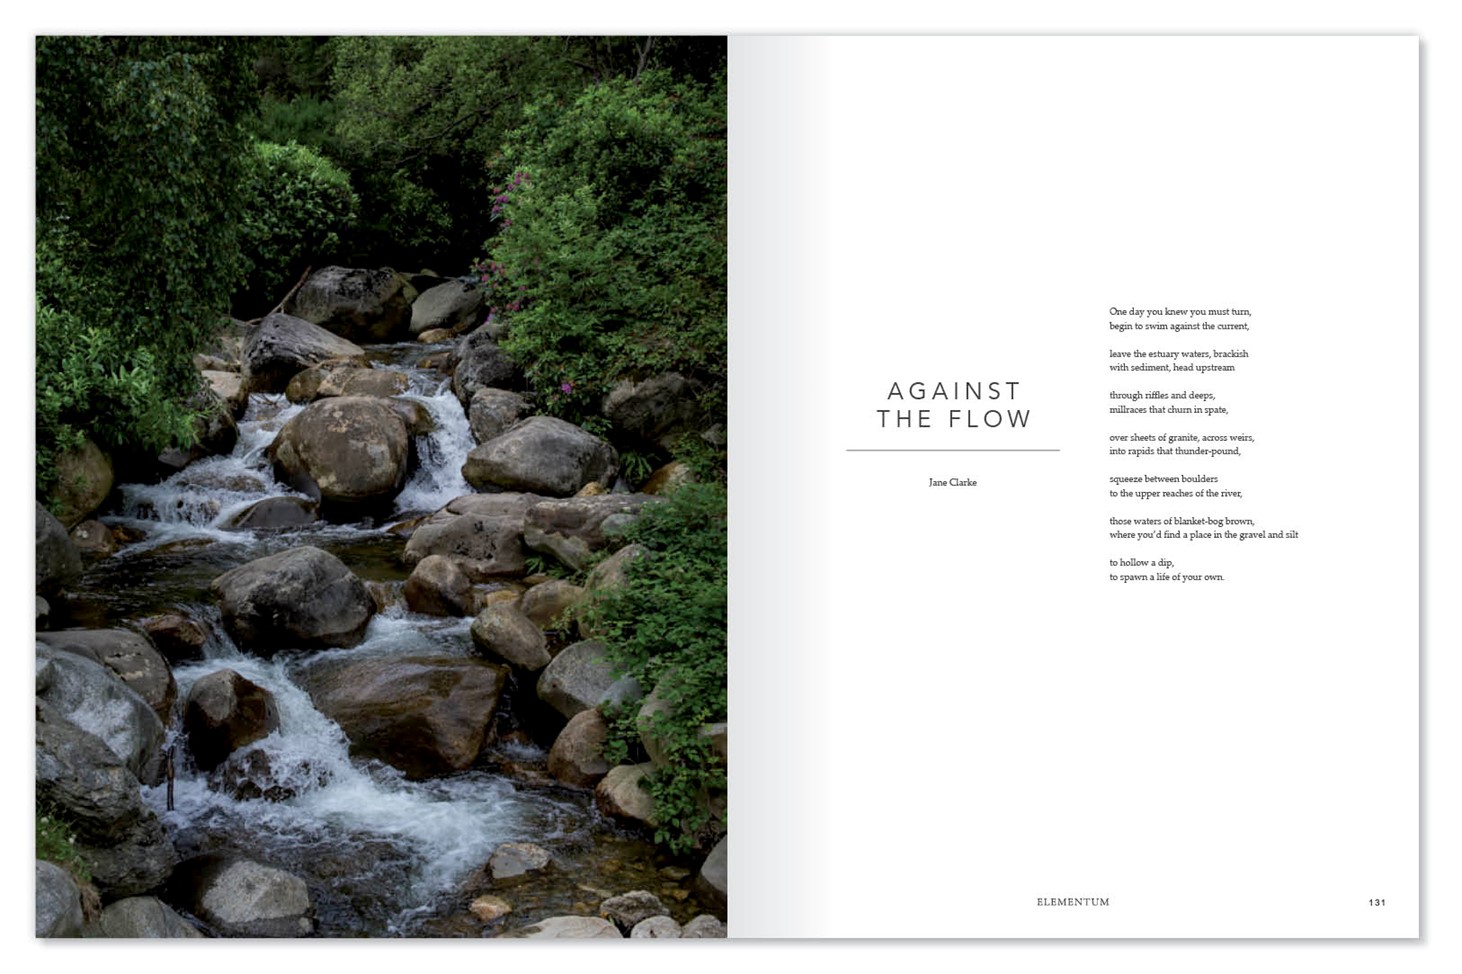 Elementum, design, print, publication, magazine, nature, clean, presentation, layout, Design79, Against the flow, river, stream, green, Cornwall